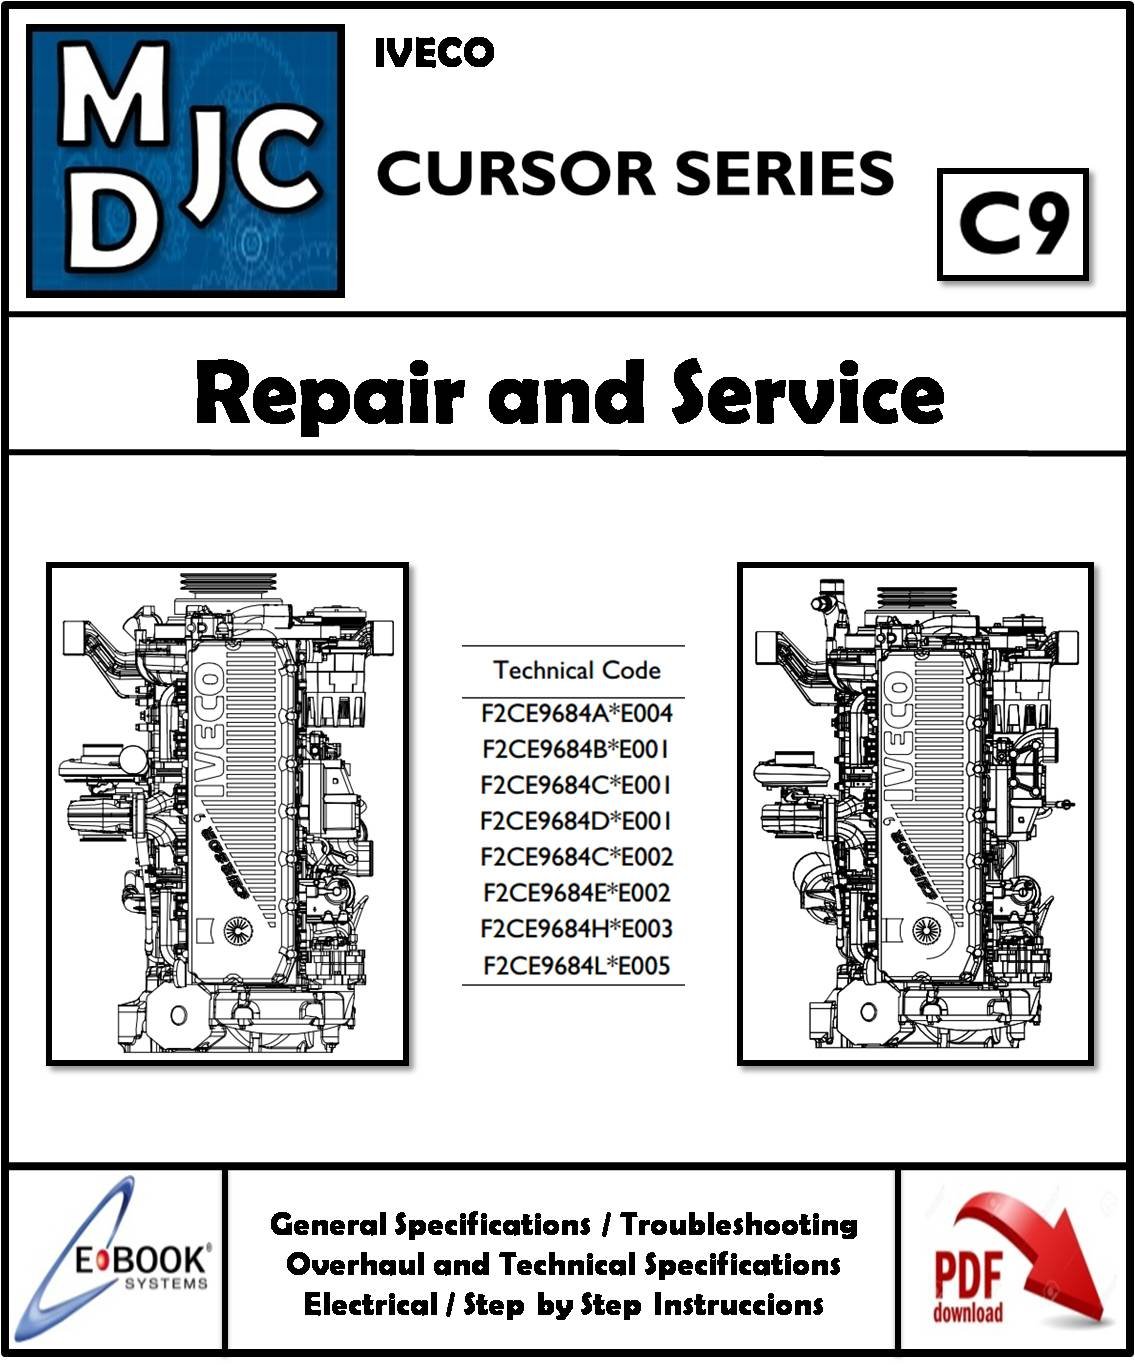 Iveco Cursor Series C9 / Cursor 9